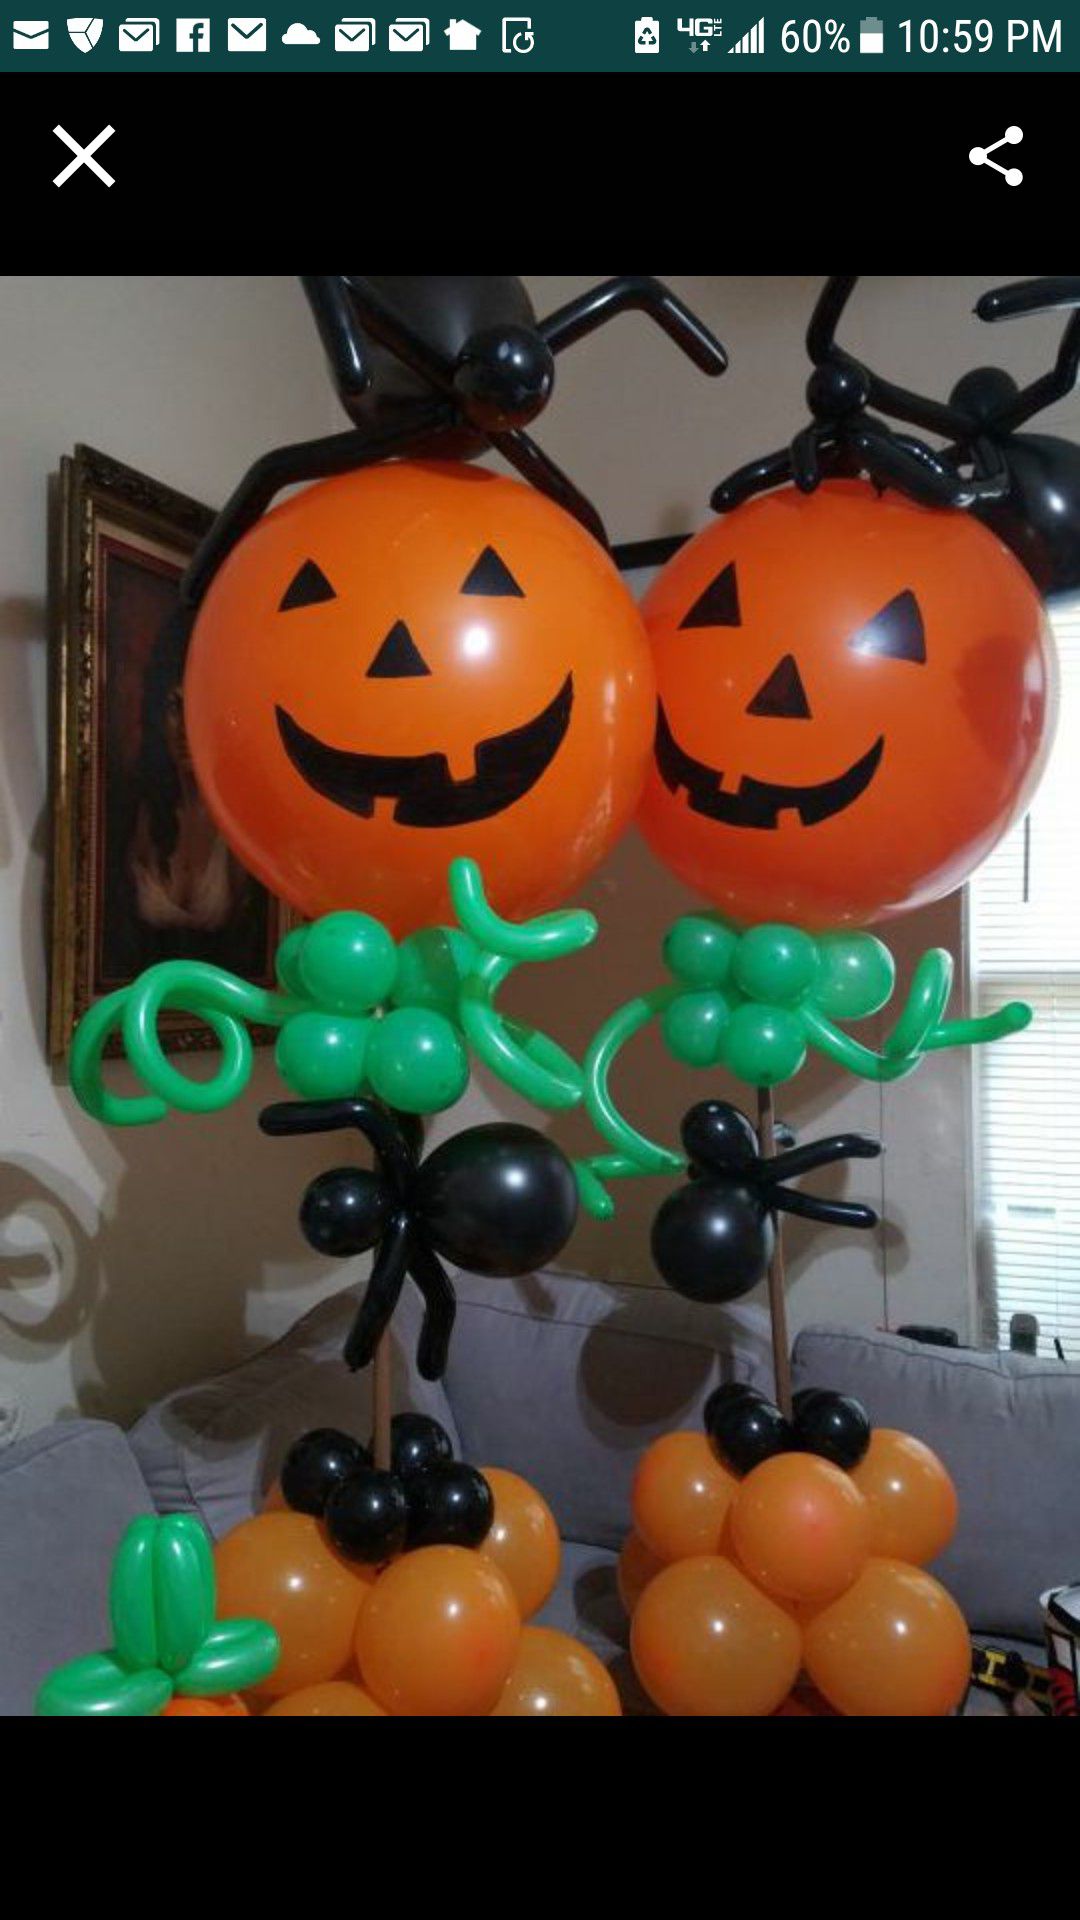 Halloween balloon/ globos decorations